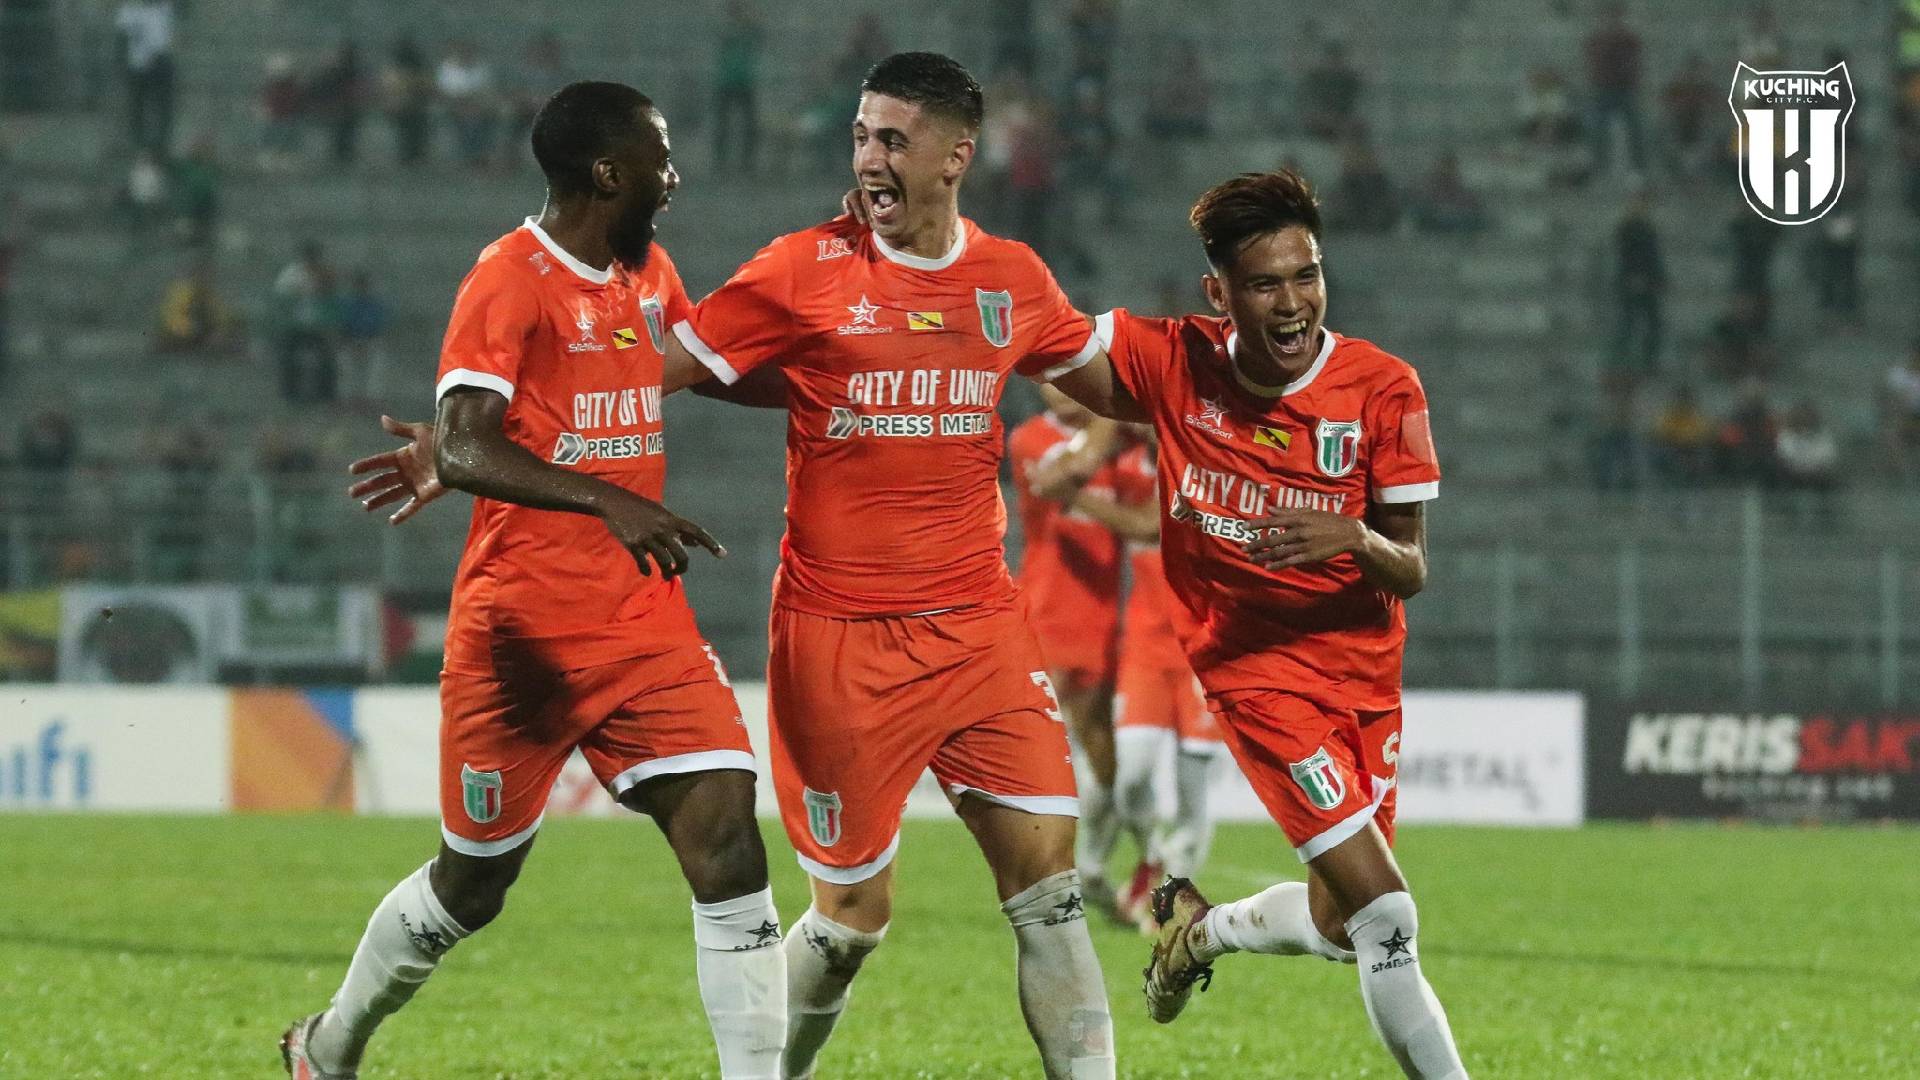 Challenge Cup: Kuching City Ke Final, Mudah Tewaskan Kelantan United